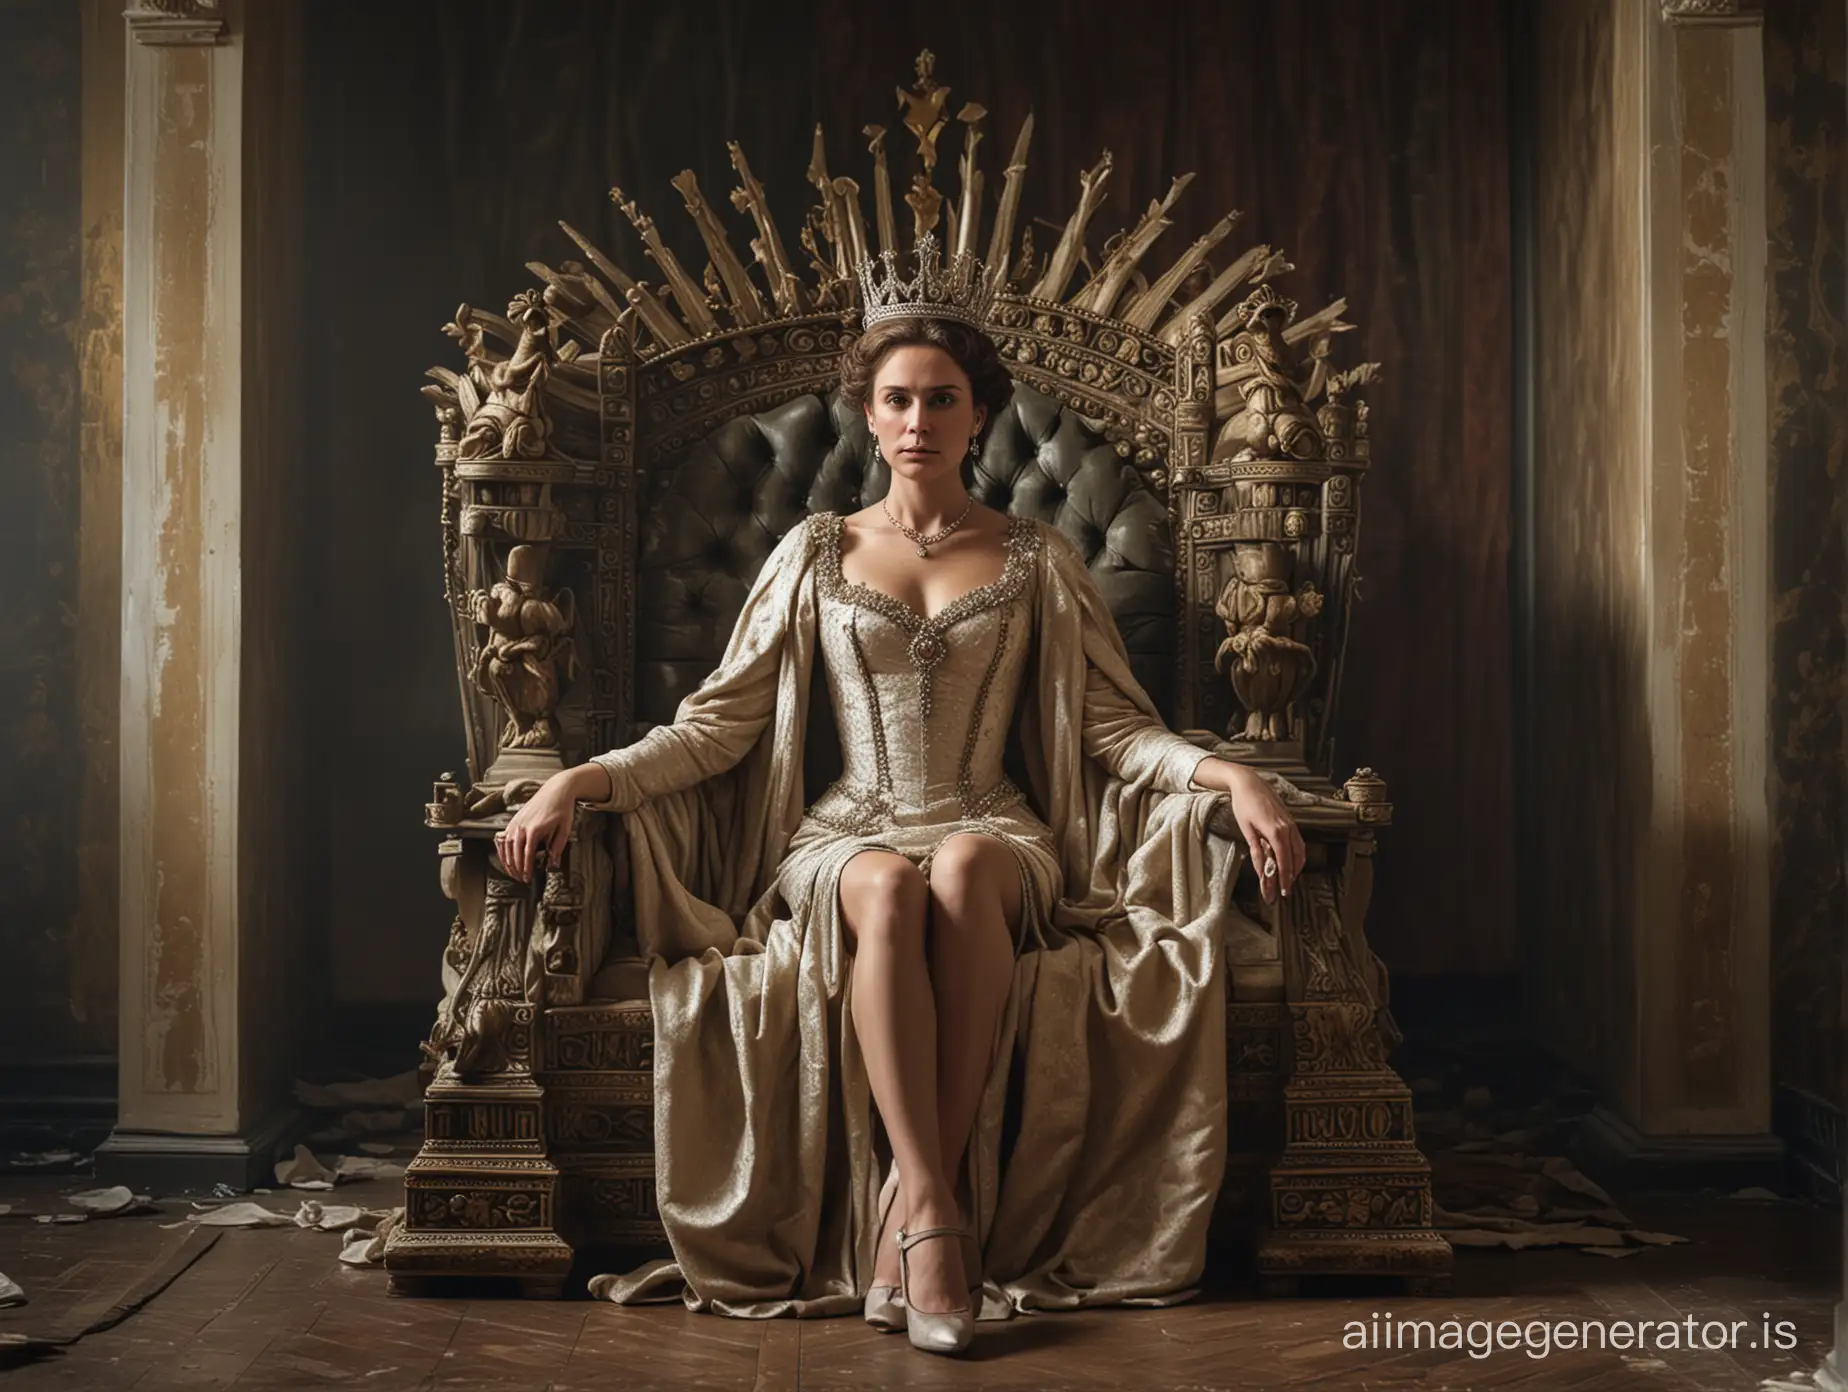 королева в короне, сидит на троне, в плохом доме